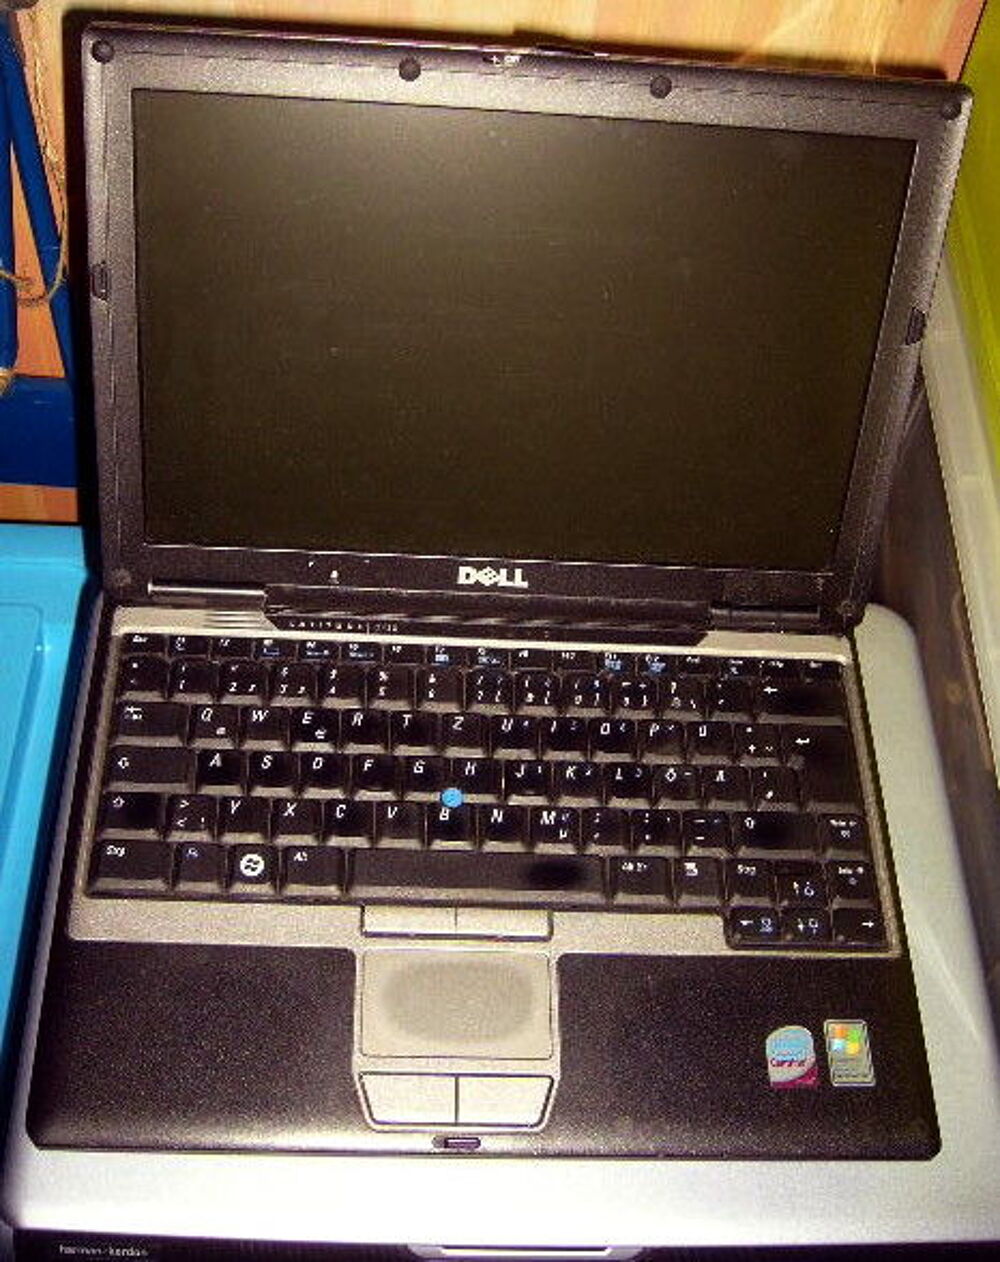 ordinateur ultraportable 12' Dell D420 Matriel informatique